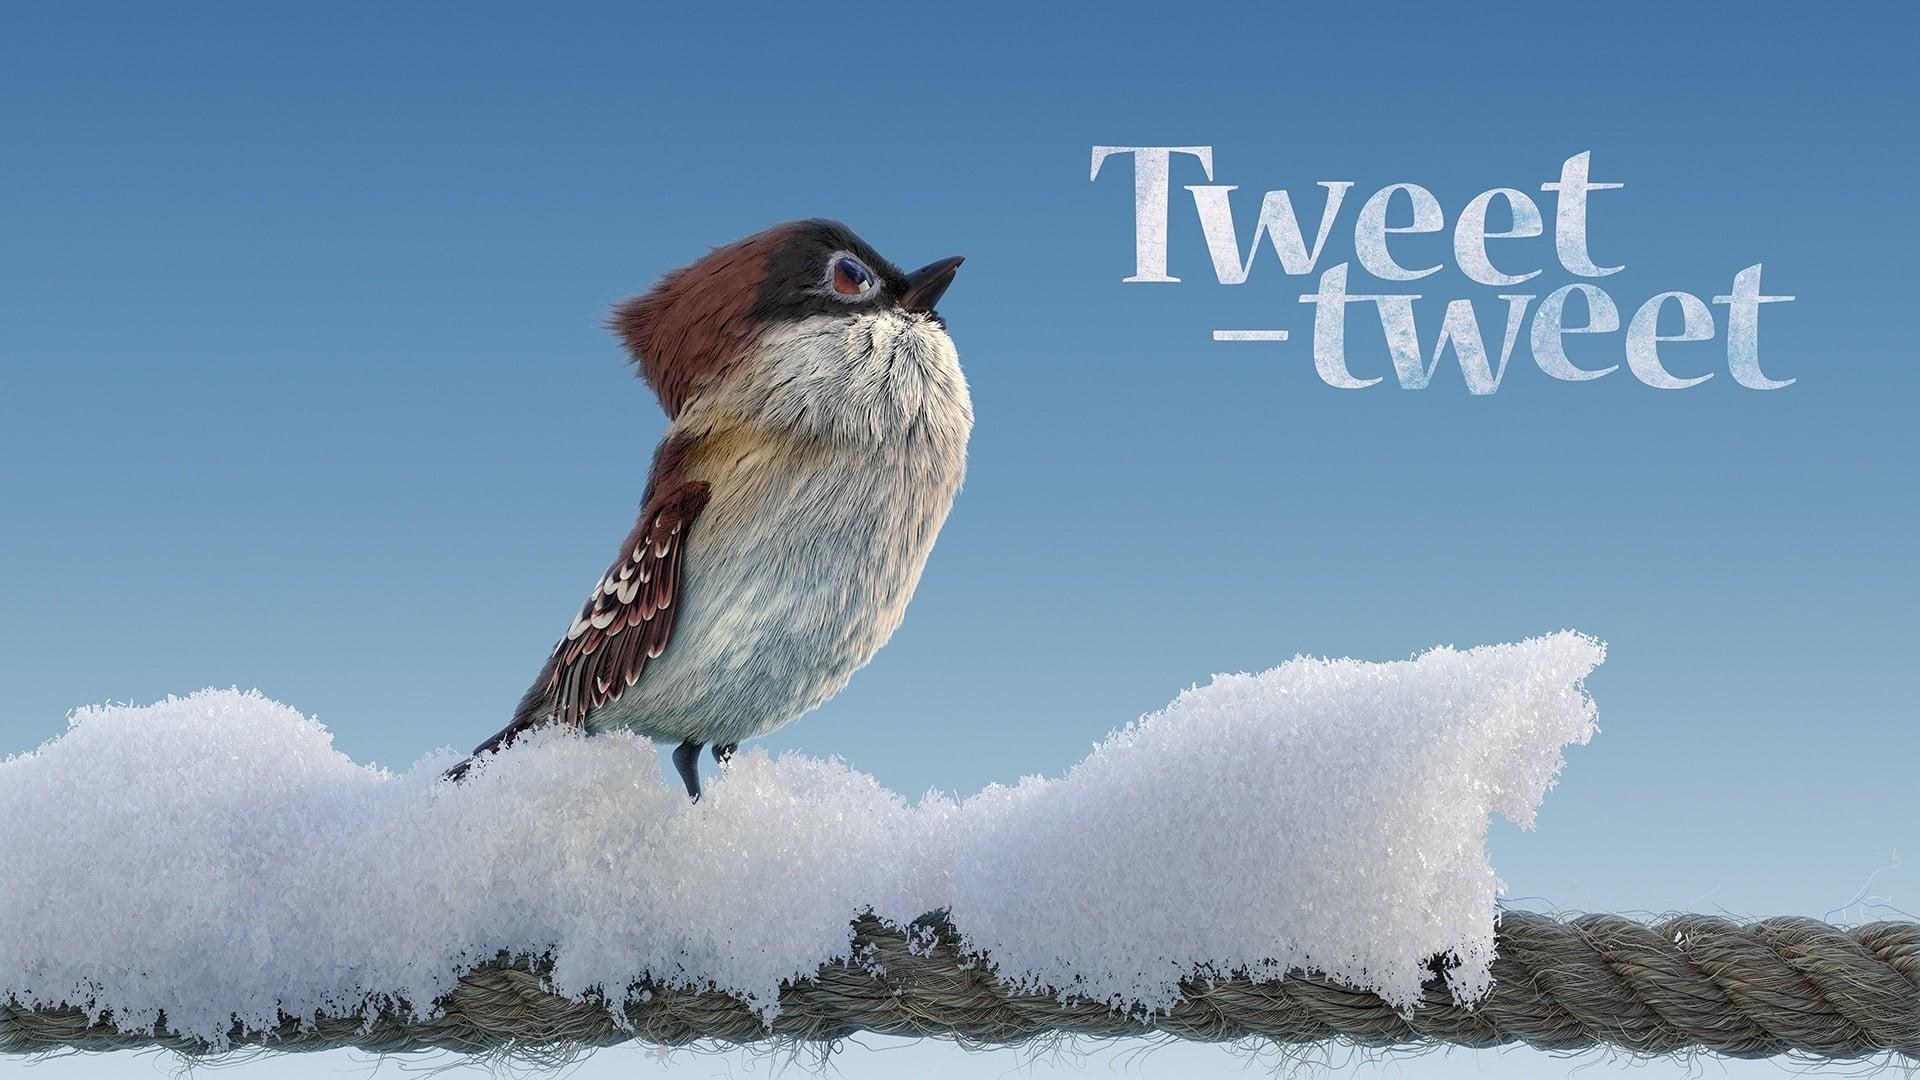 Tweet-Tweet backdrop